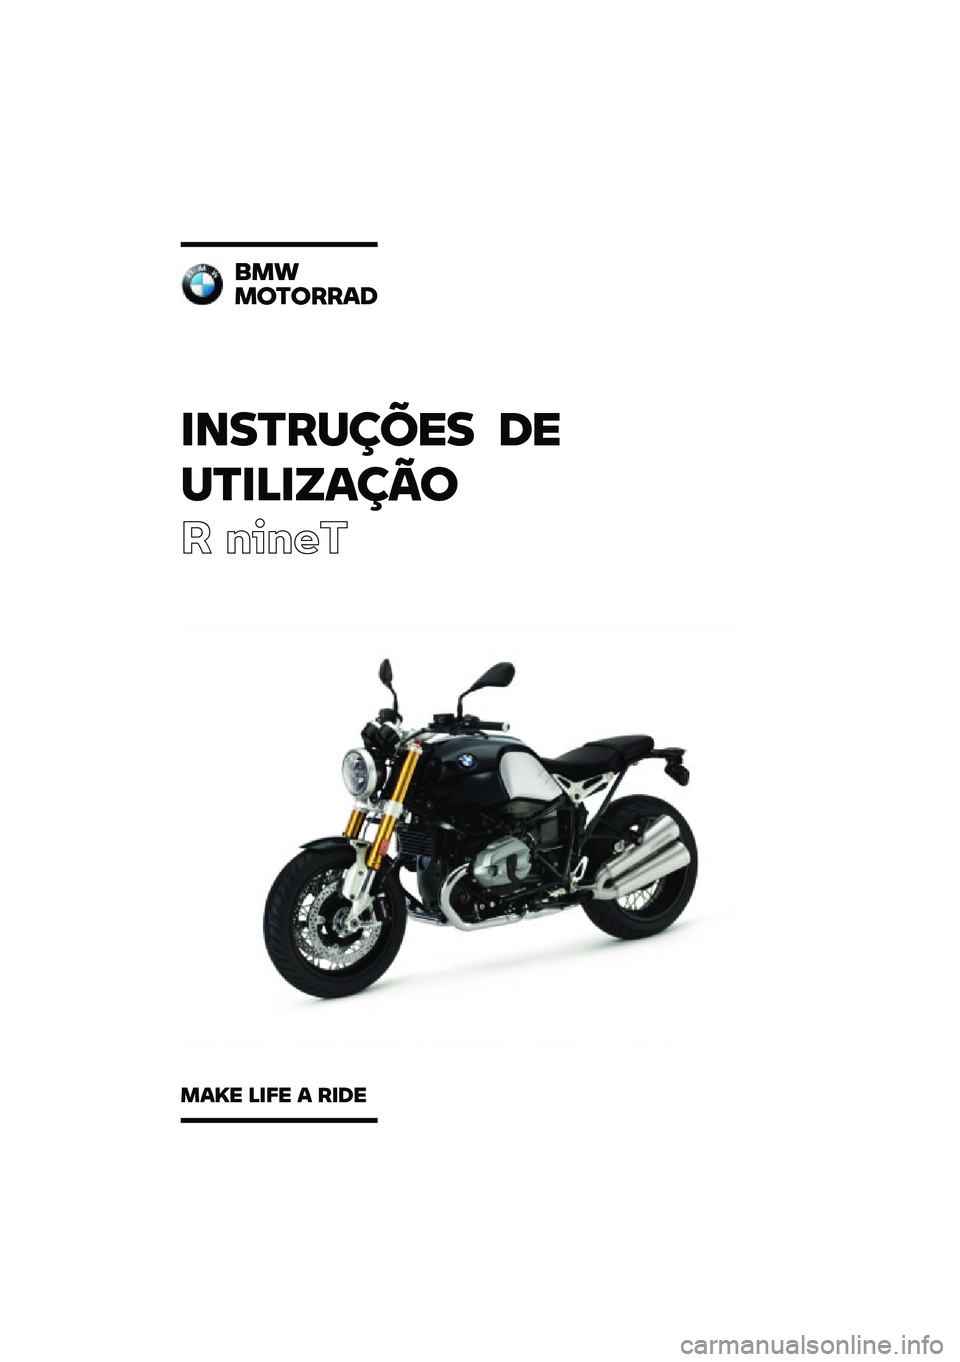 BMW MOTORRAD R NINE T 2020  Manual do condutor (in Portuguese) �������\b�	�\f� �
�\f
��������\b��

� �����
���
��
��
����
����\f ����\f � ���
�\f 